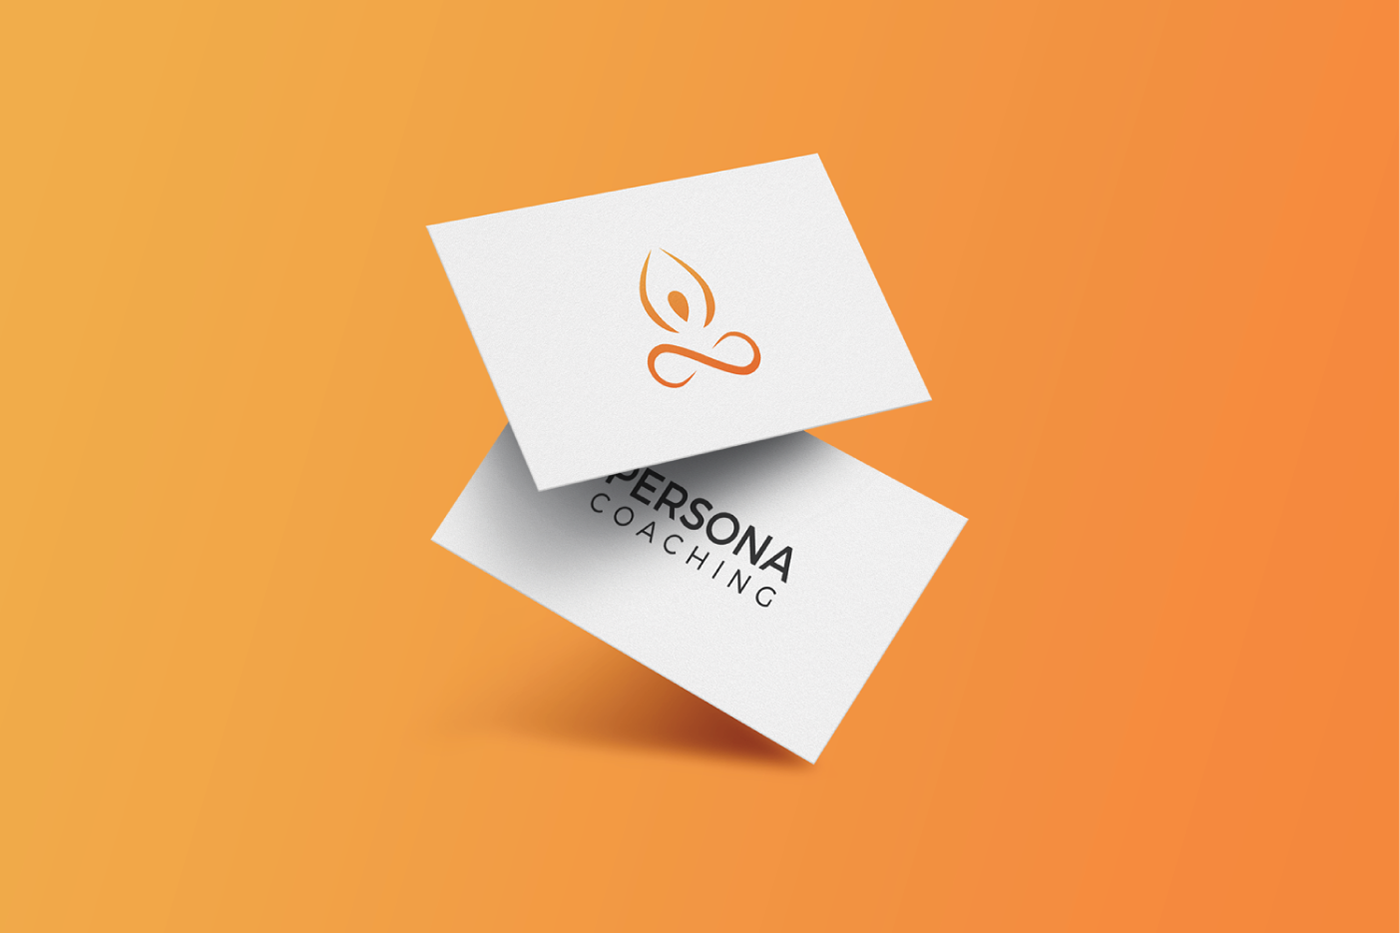 logo coaching redesign brandmark wordmark meditate orange lifestyle